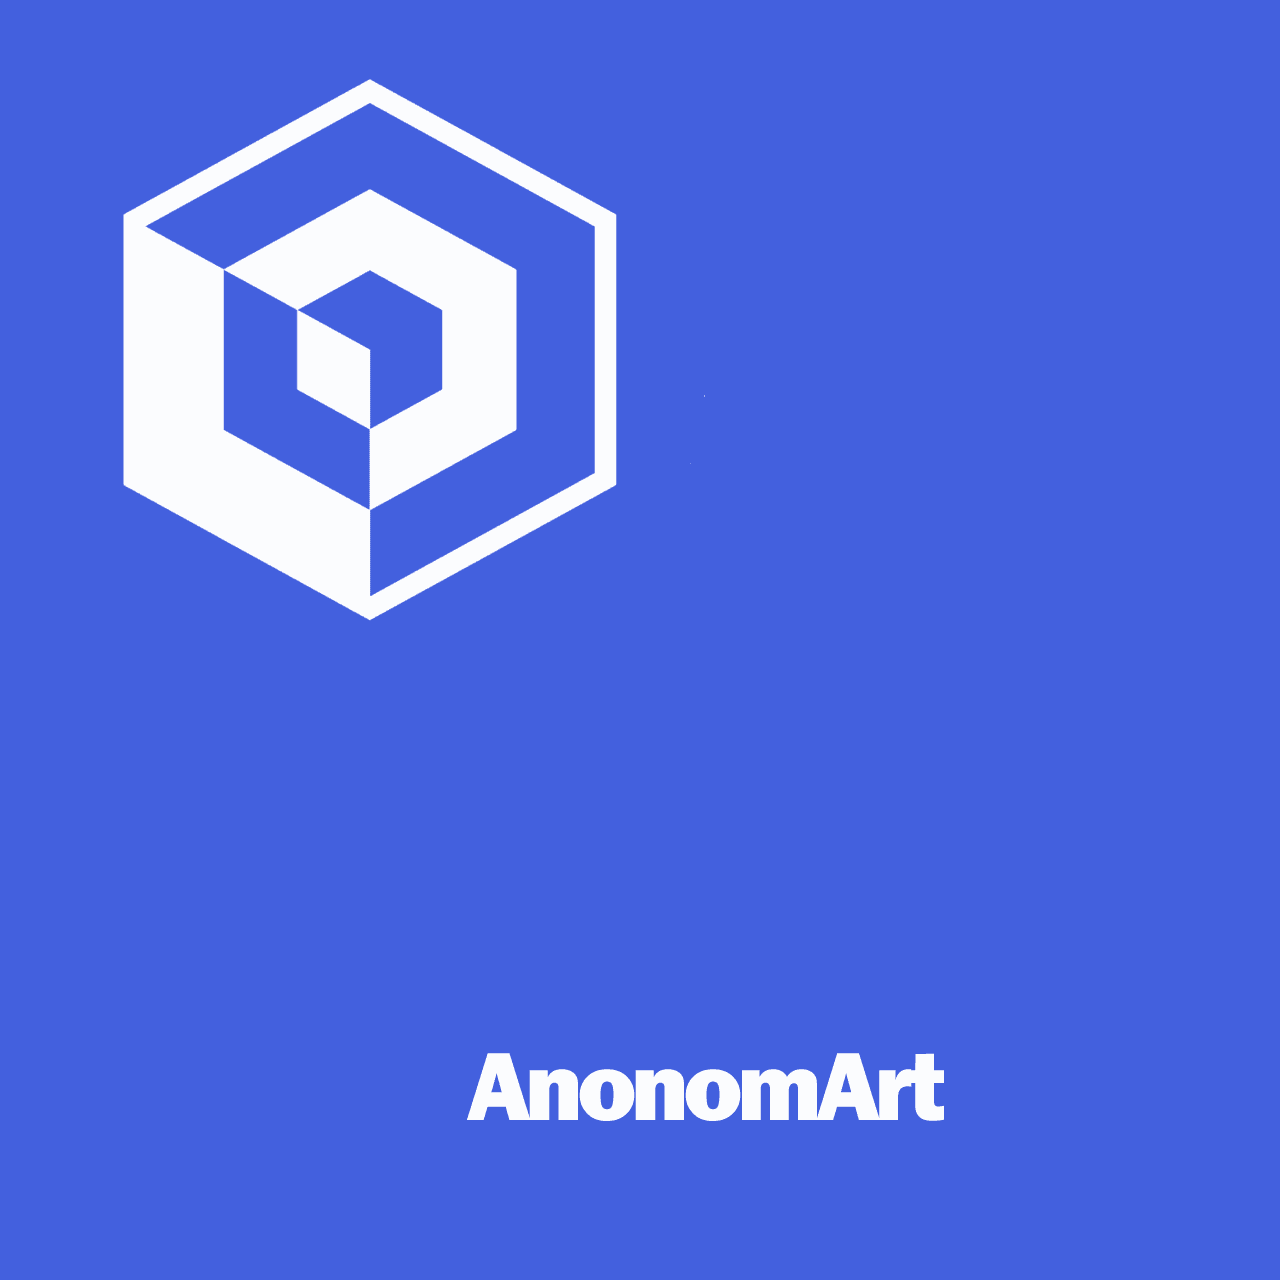 AnonomArt